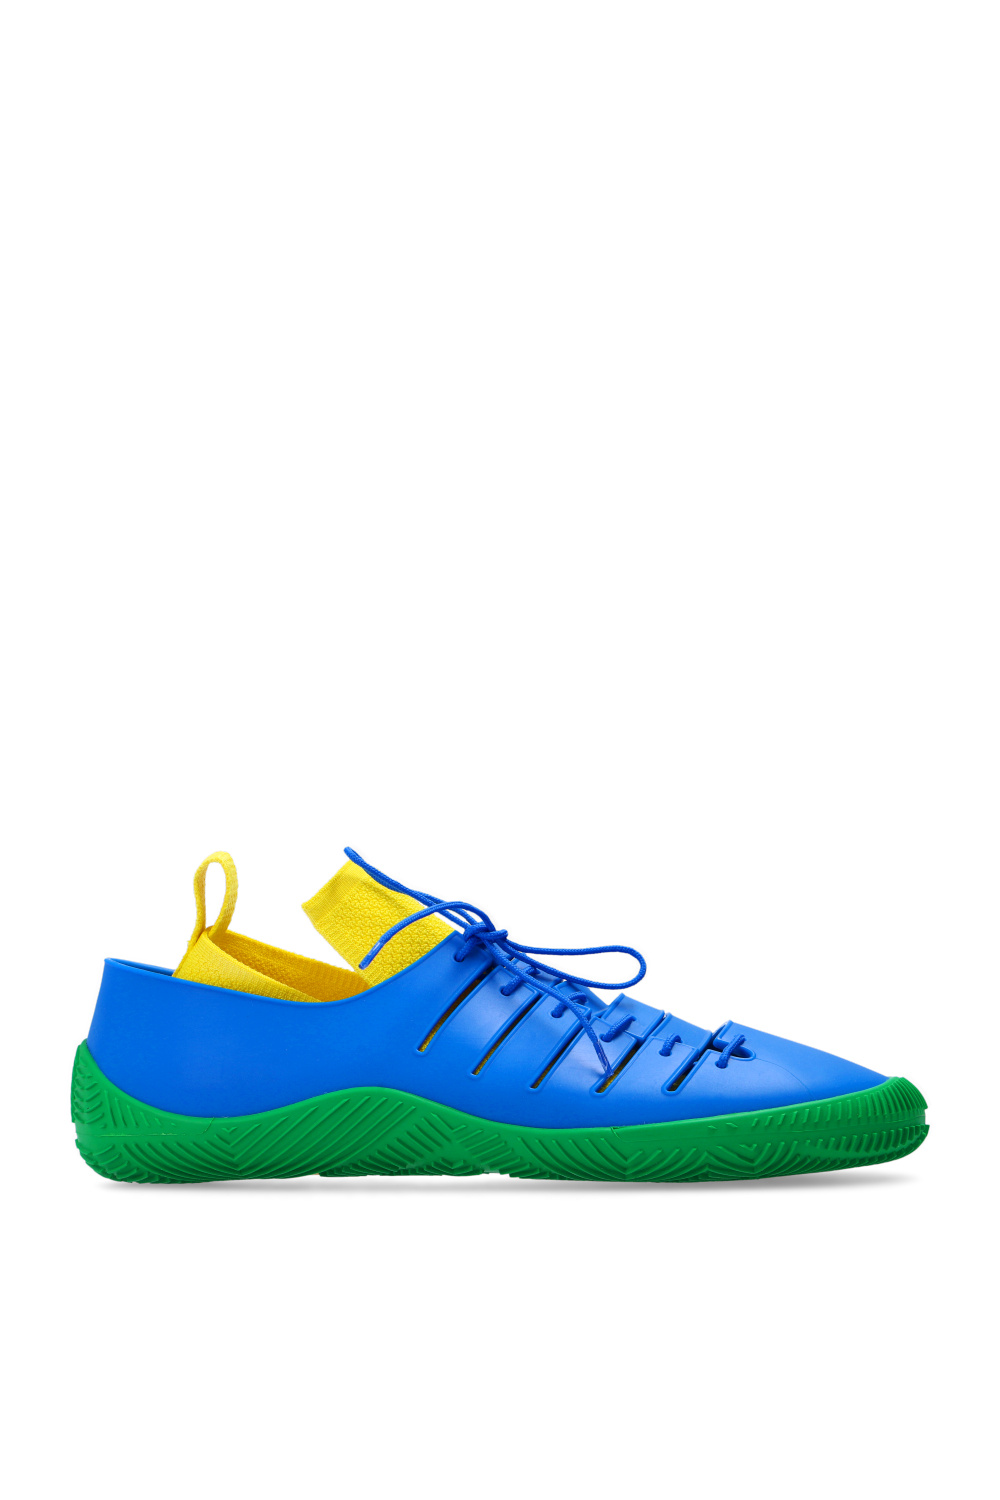 Bottega Veneta ‘Climber’ sneakers